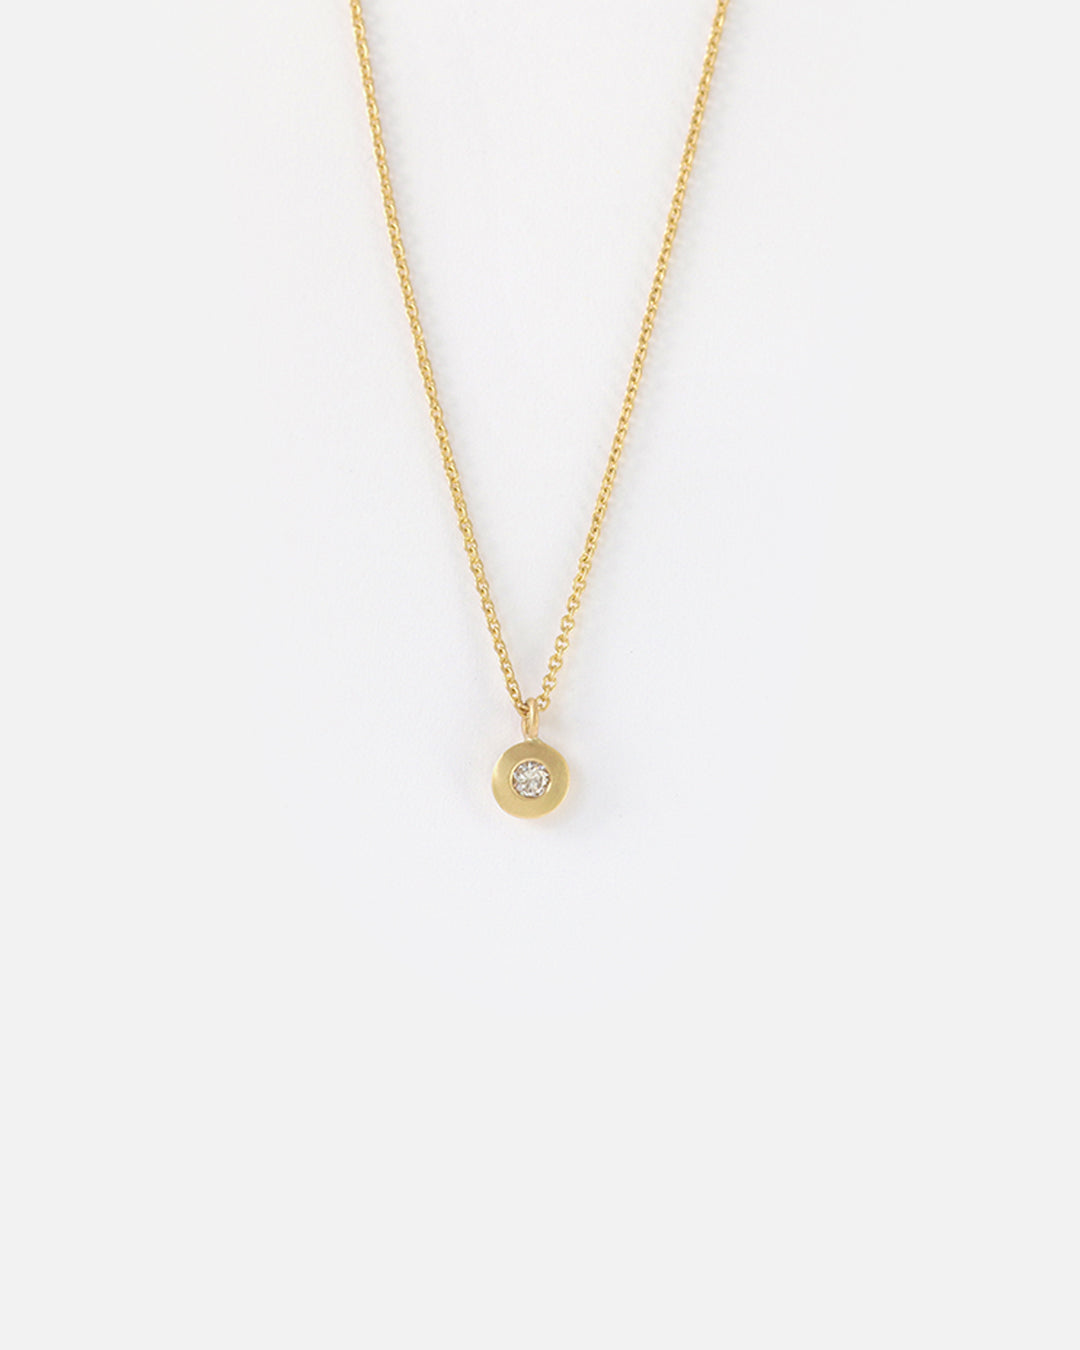 Diamond Dot / Necklace By Tricia Kirkland in pendants Category